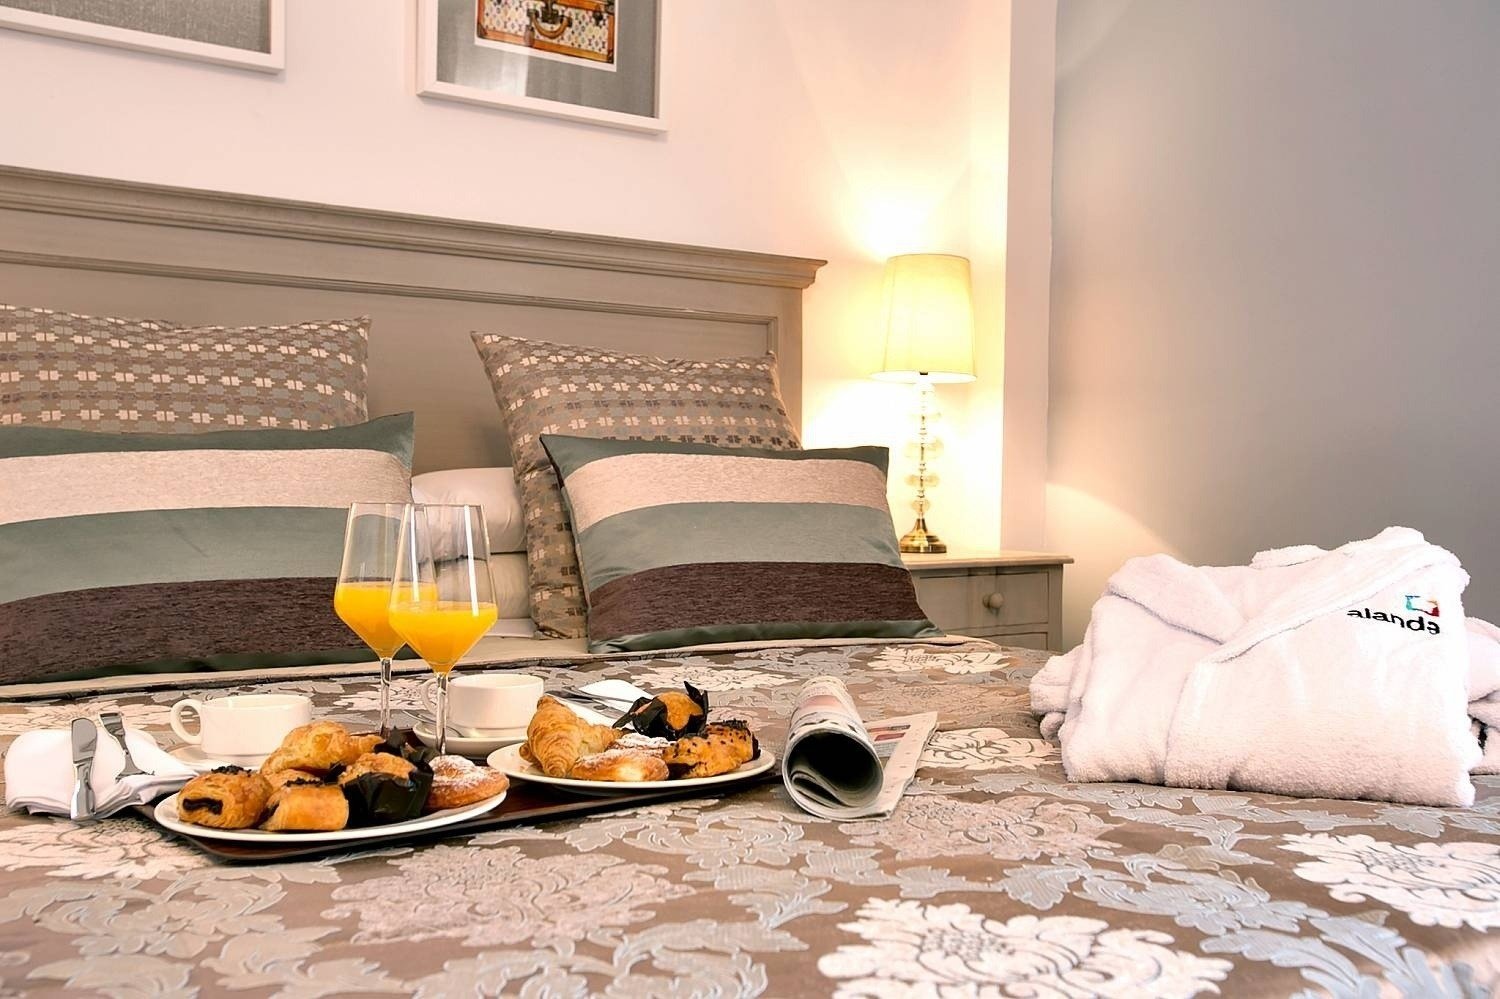 Detail of breakfast in the double bedroom of the Hotel Ona Alanda Club Marbella